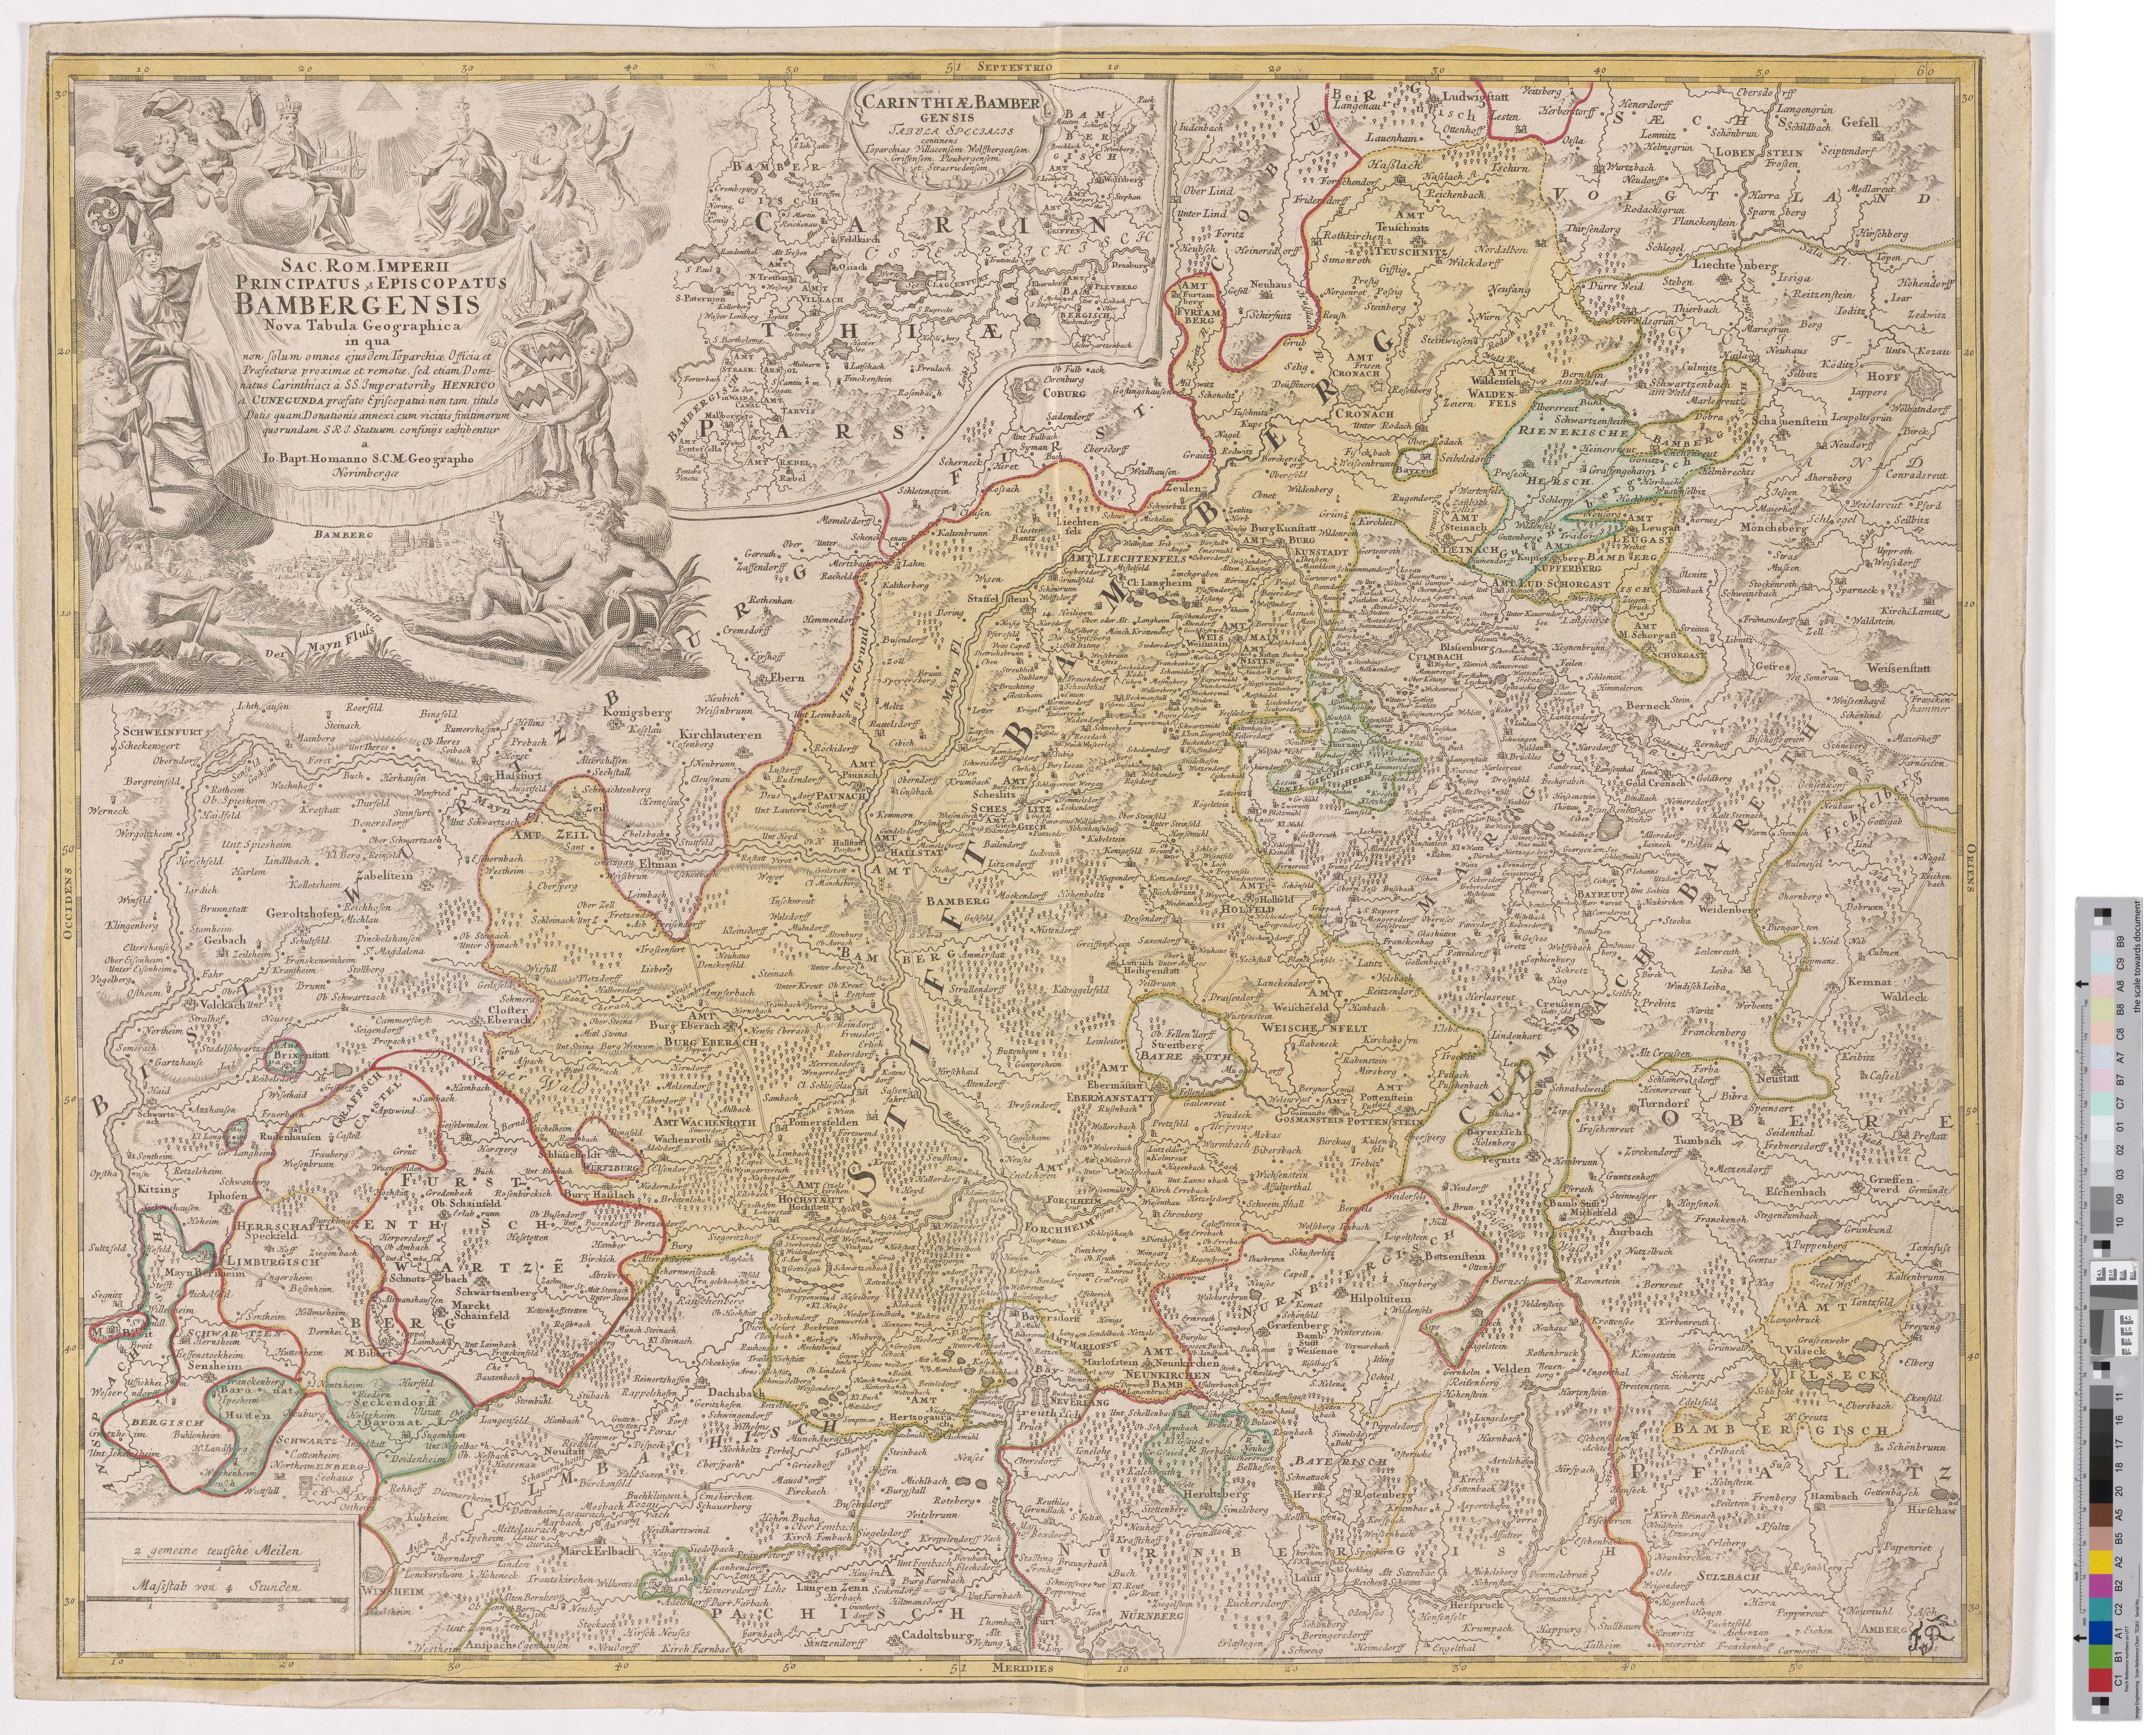 Landkarte "Sac. Ro. Imperii Principatus &amp; Episcopatus Bambergensis" (Kreismuseum Grimma RR-F)